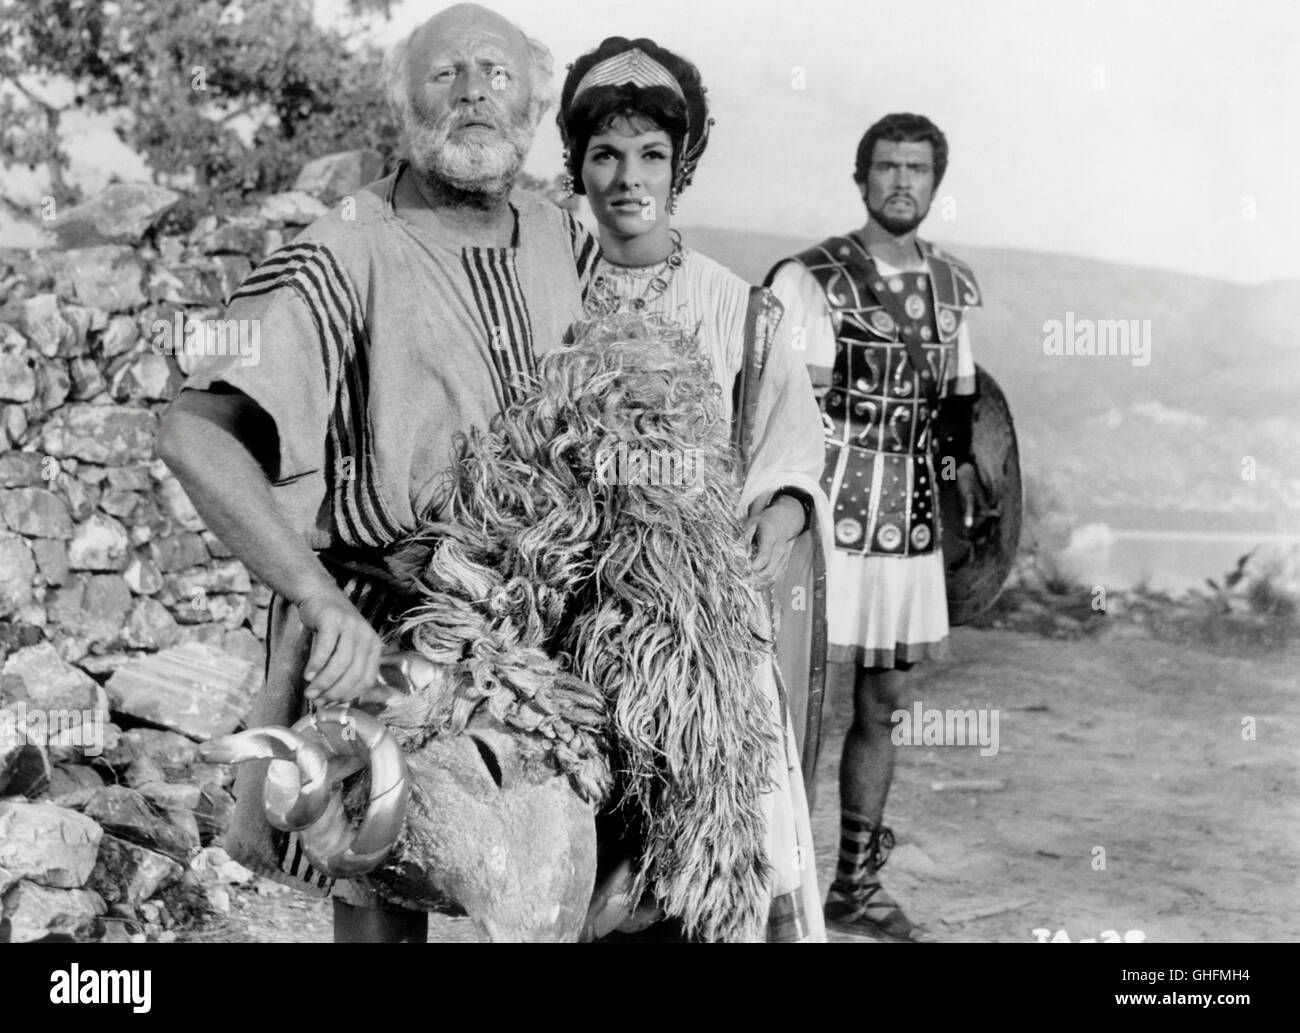 JASON AND THE ARGONAUTS UK/USA 1964 Don Chaffey Argos (LAURENCE NAISMITH) with the Golden Fleece, Medea (NANCY KOVACK), Jason (TODD ARMSTRONG) Regie: Don Chaffey Stock Photo